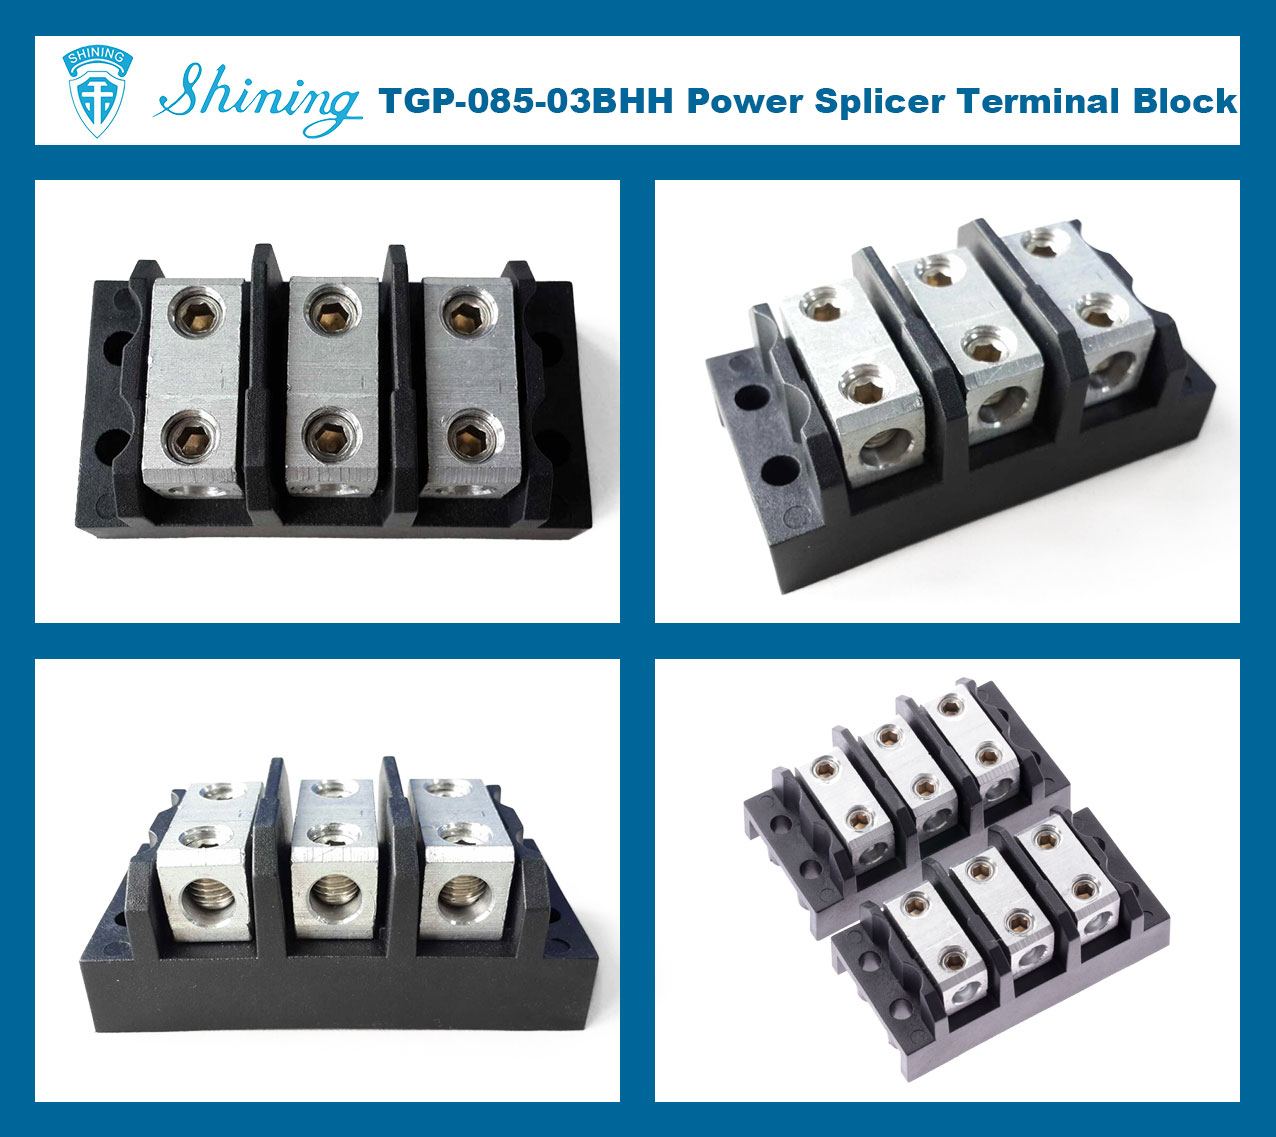 TGP-085-03BHH 600V 85A 3 Way Power Splicer Terminal Block